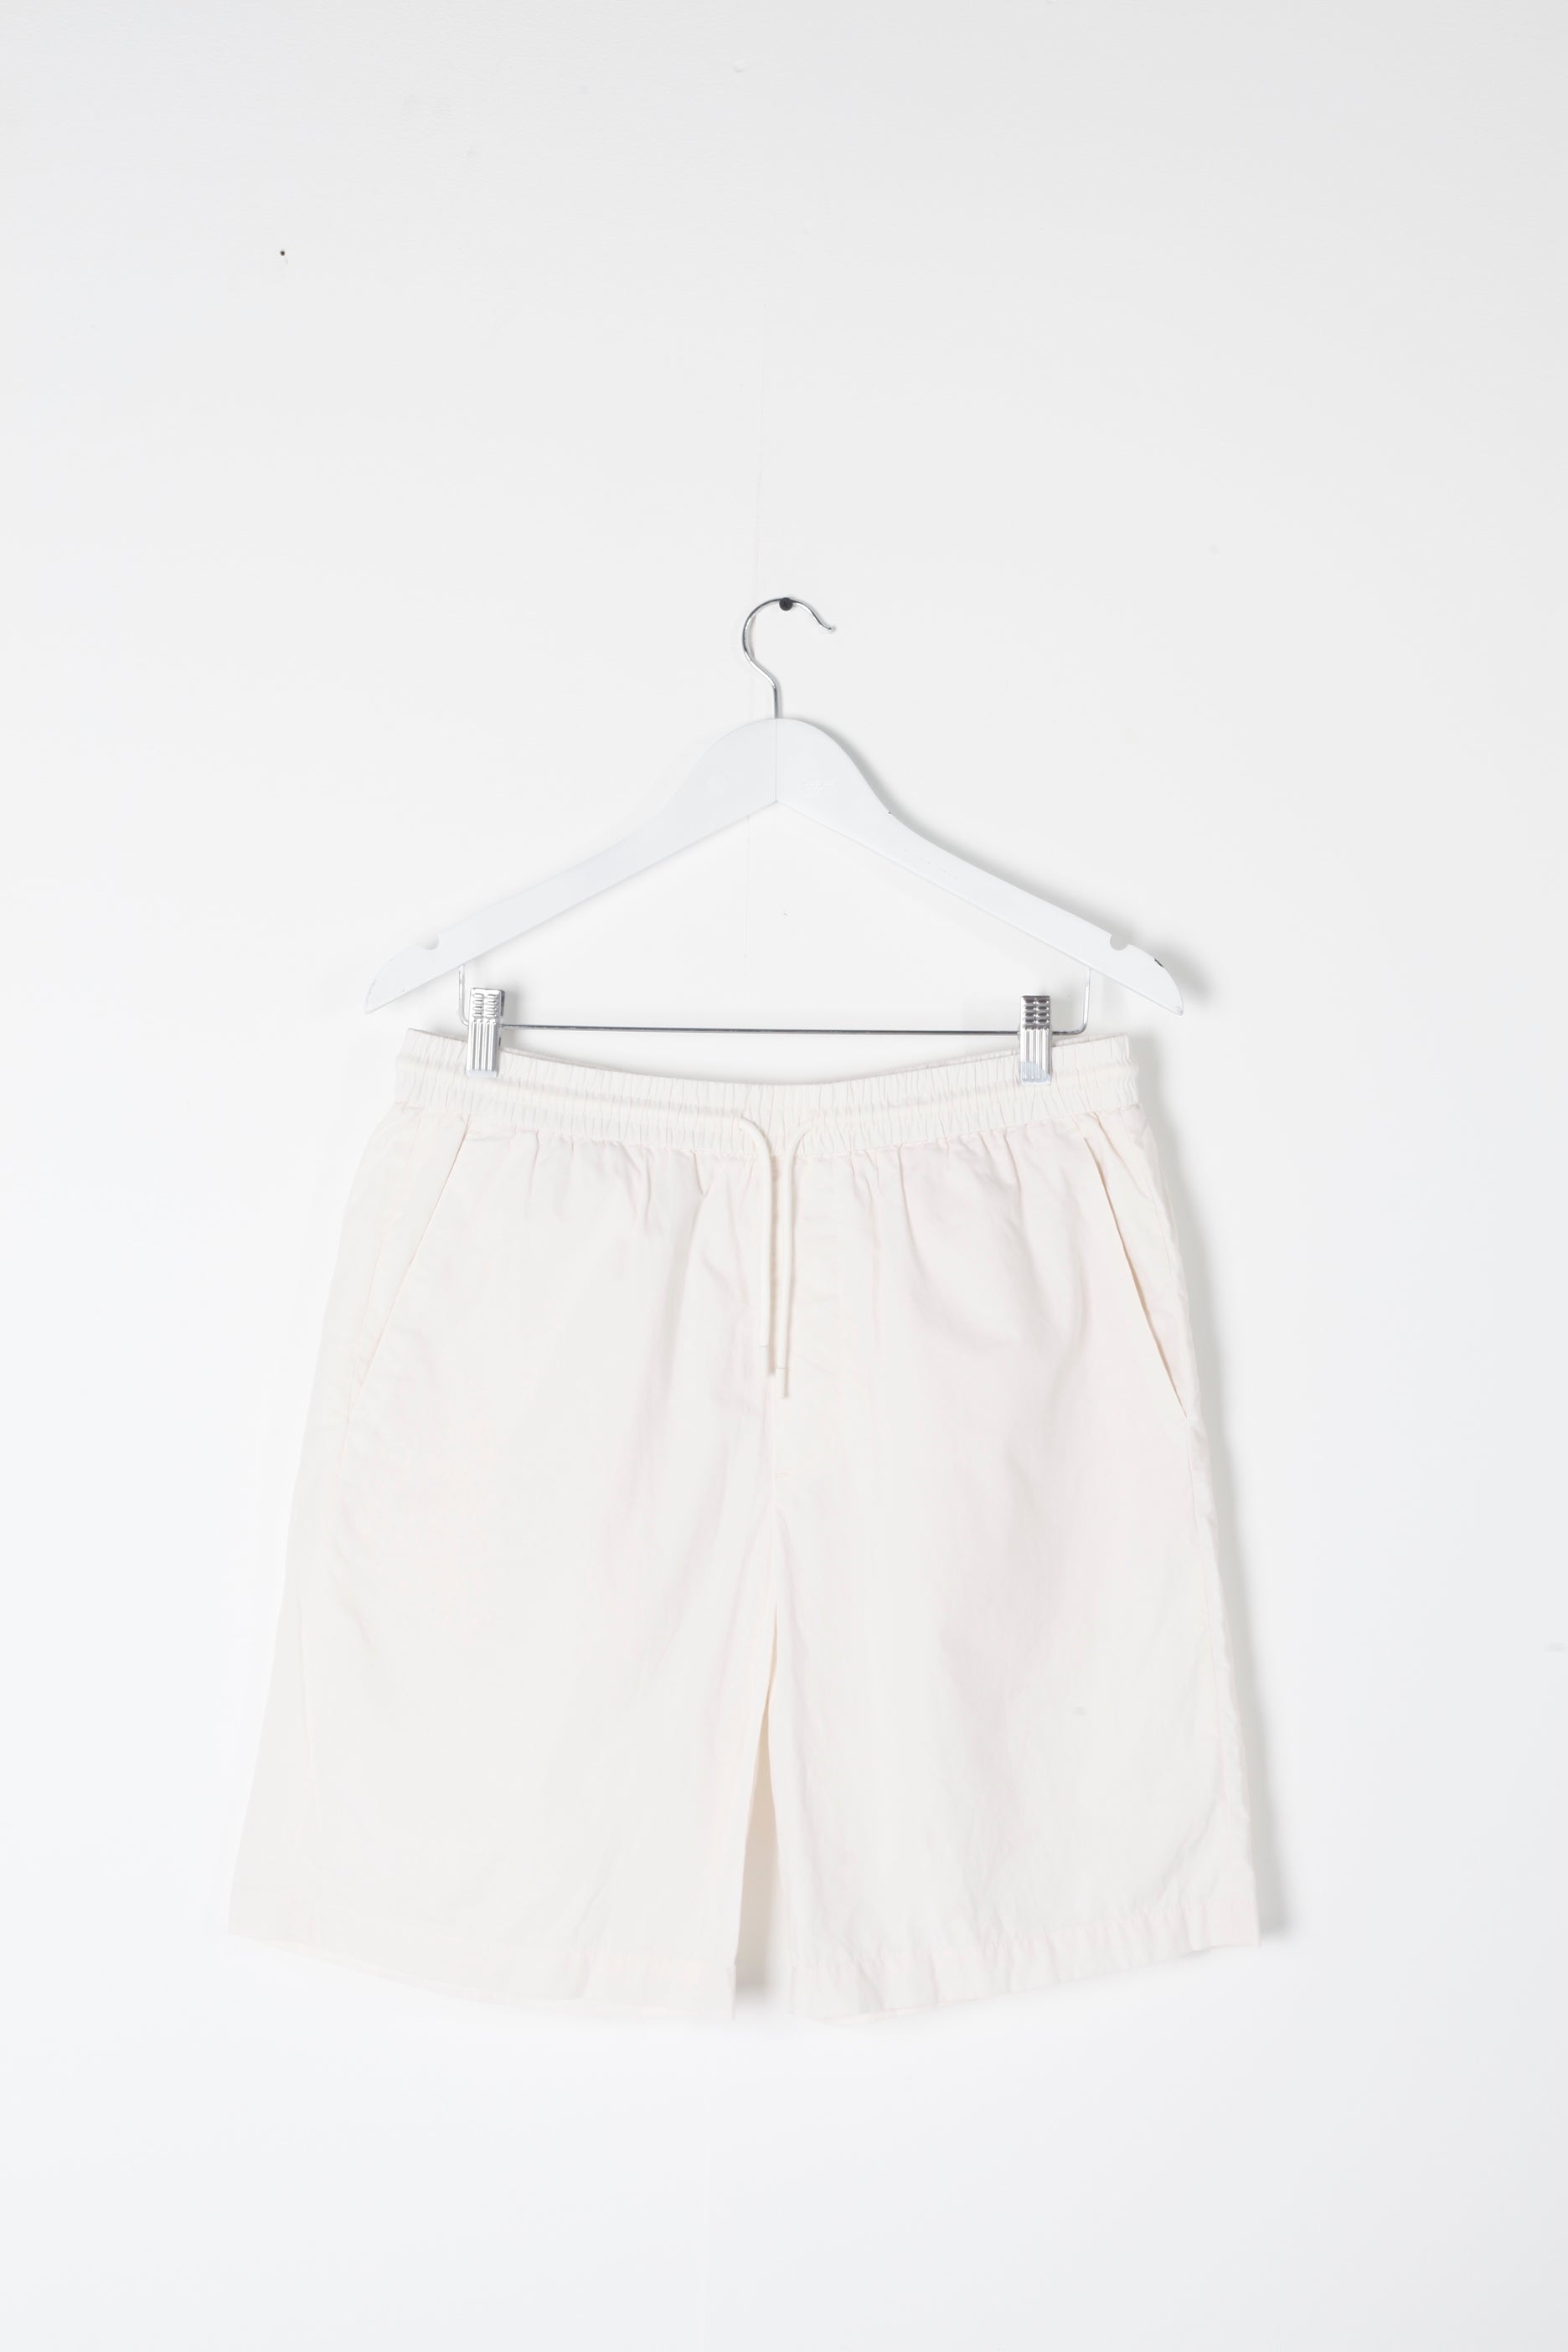 White Drawstring Shorts (Medium)